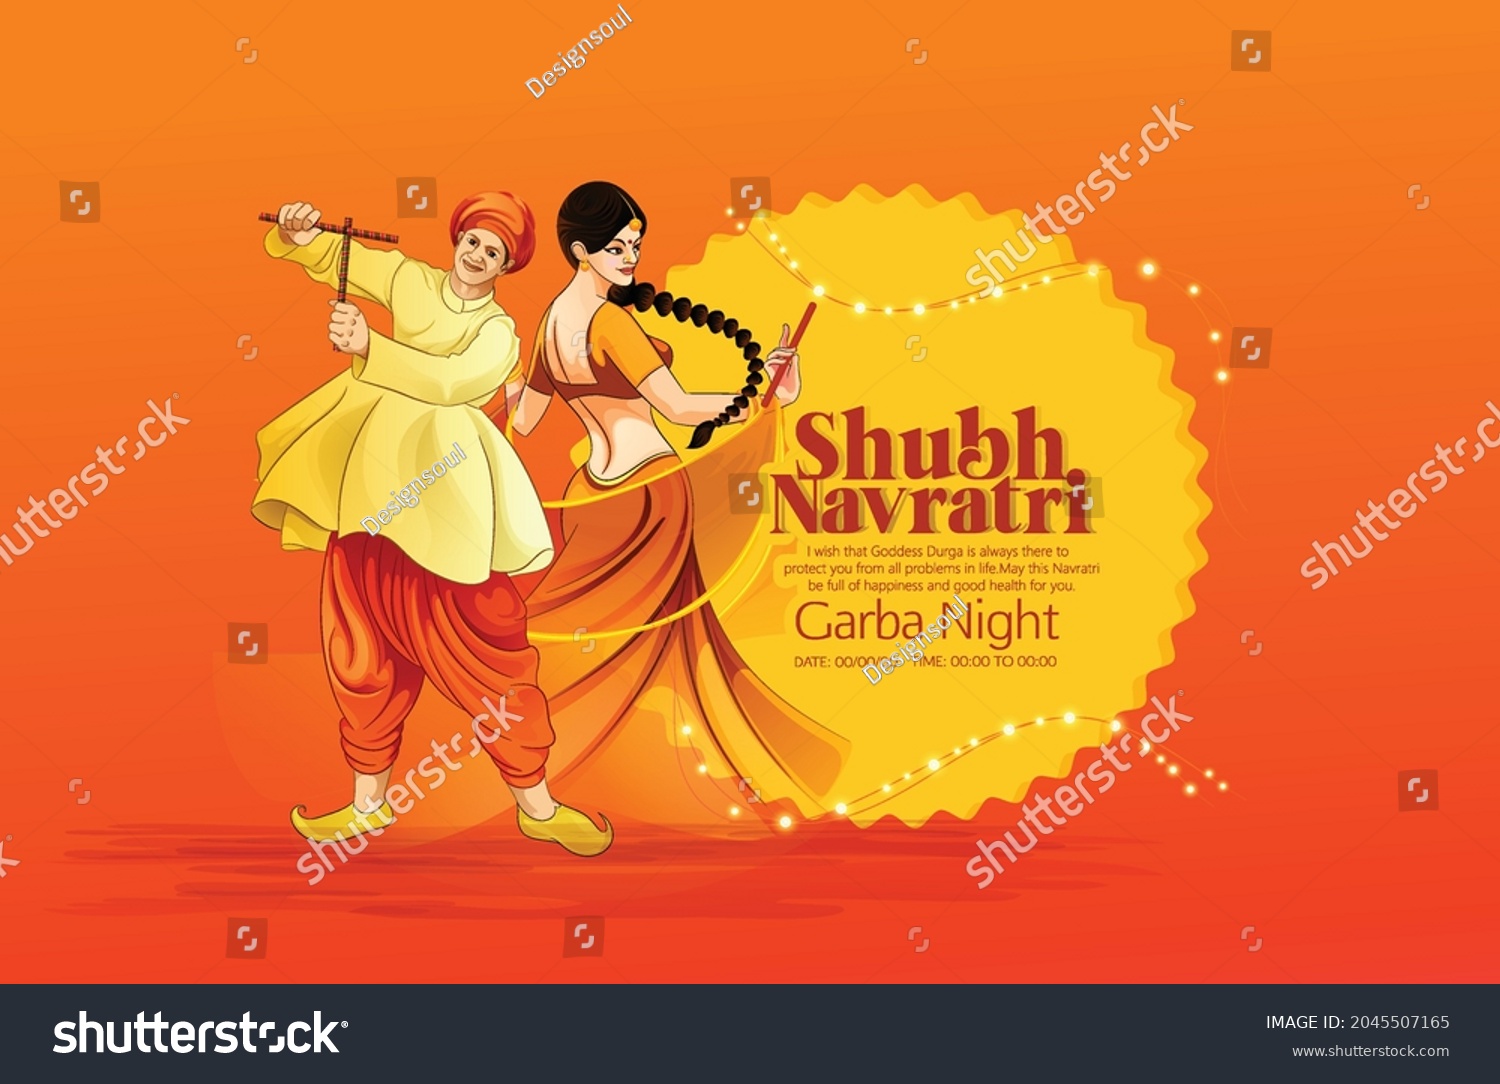 SVG of illustration of  Goddess Durga for Happy Navratri festival,  Couple Playing Dandiya, Garba Night in Navratri Celebration  svg